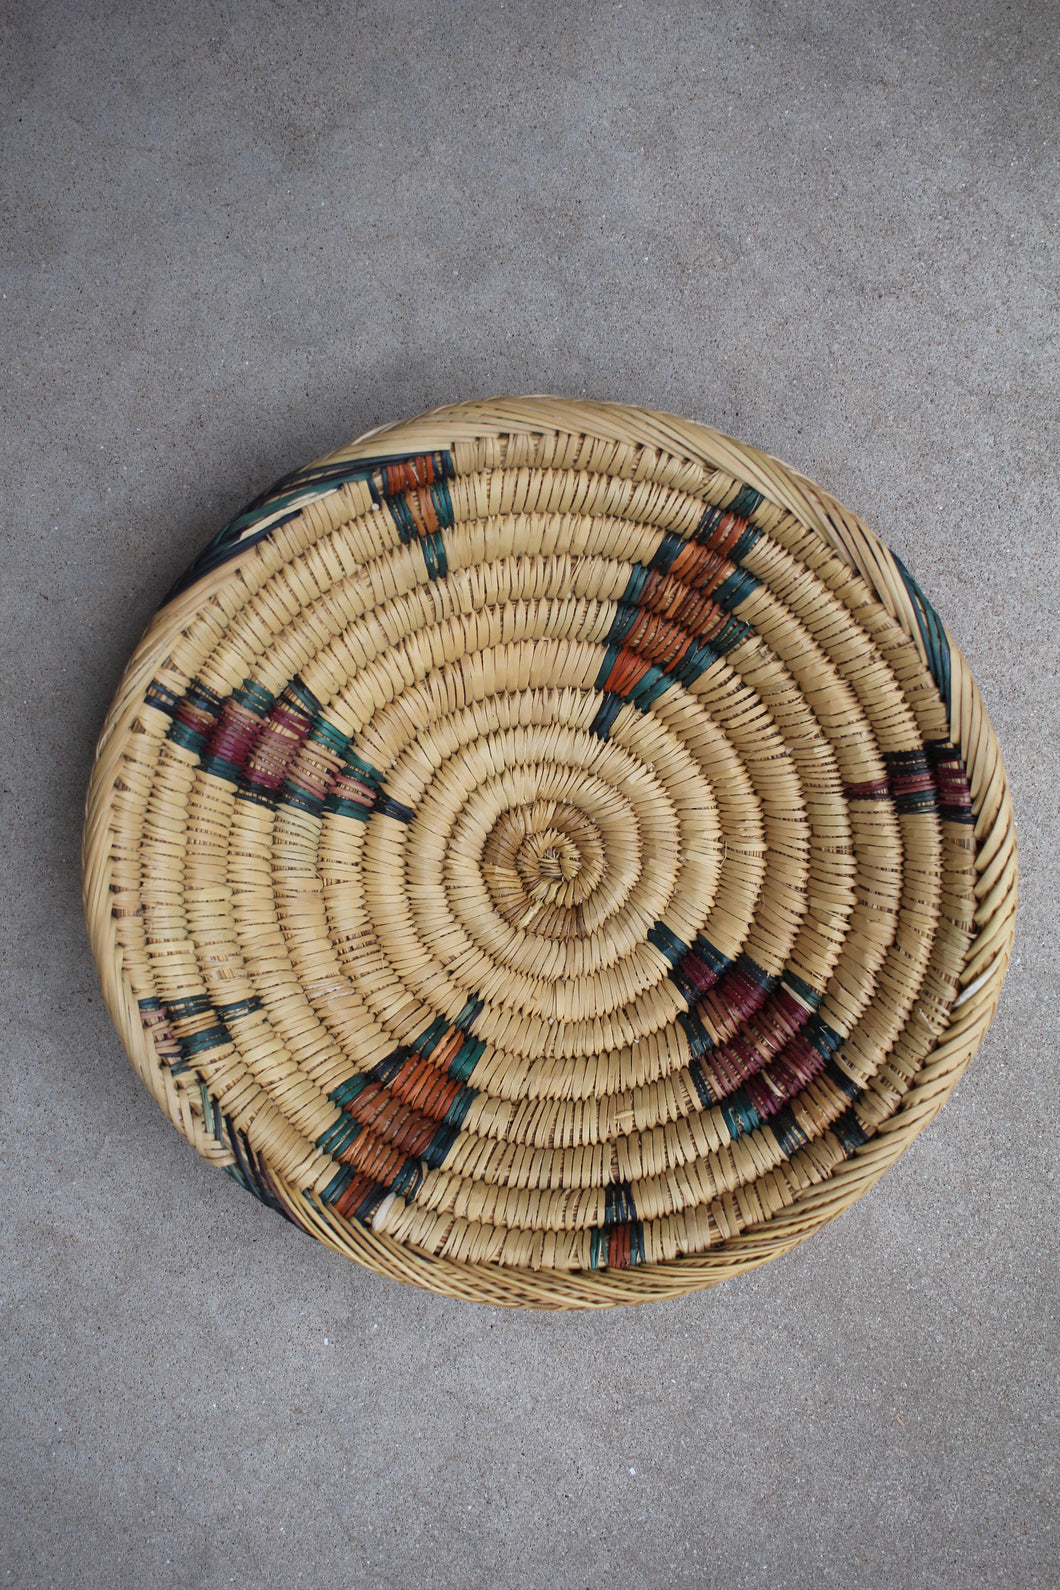 Shallow Basket - Natural #2